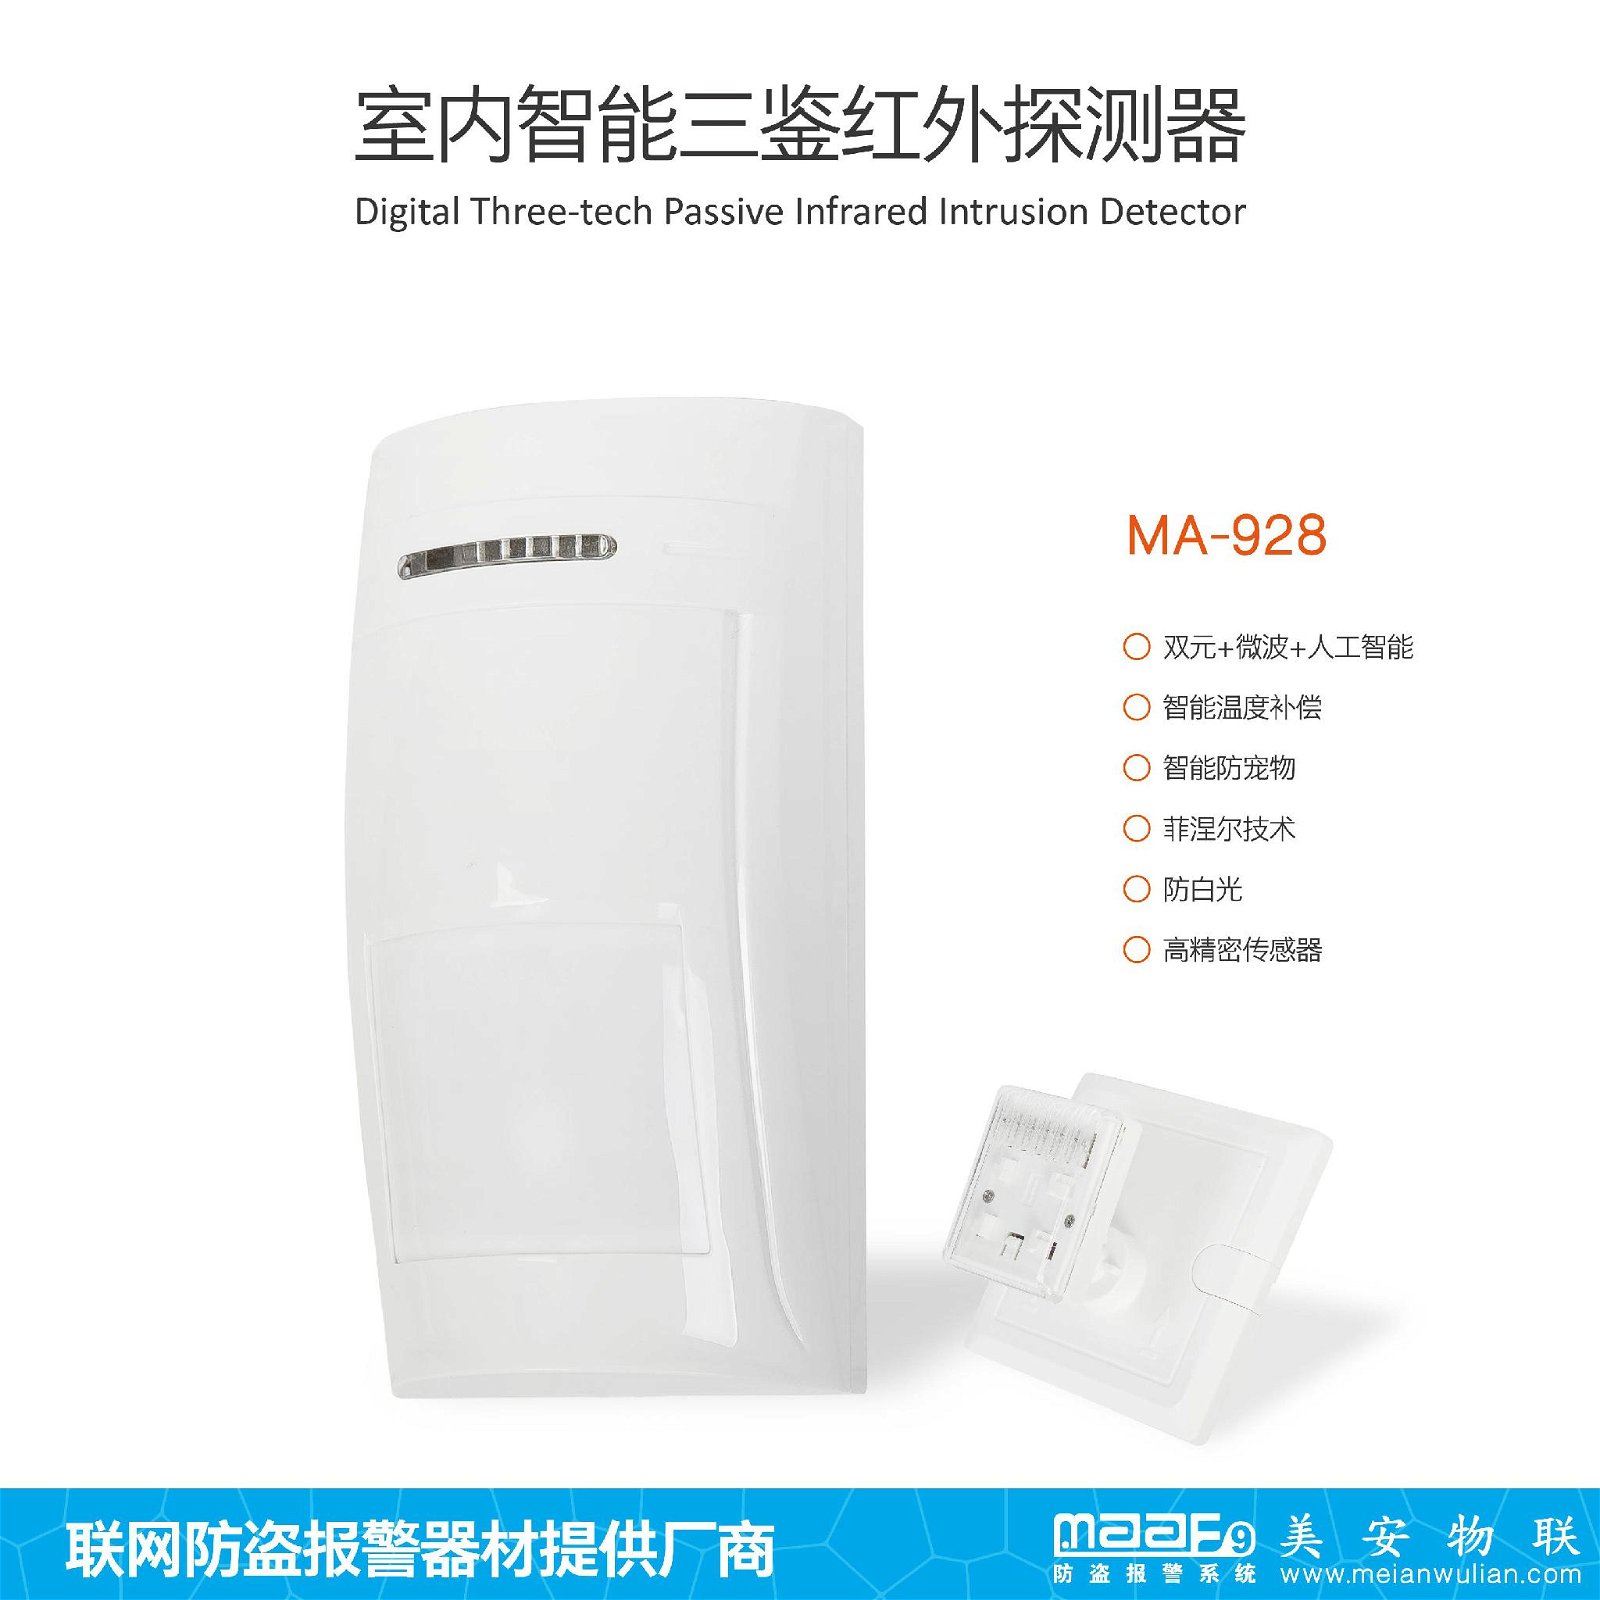 928 Digital three-tech passive infrared intrusion detector